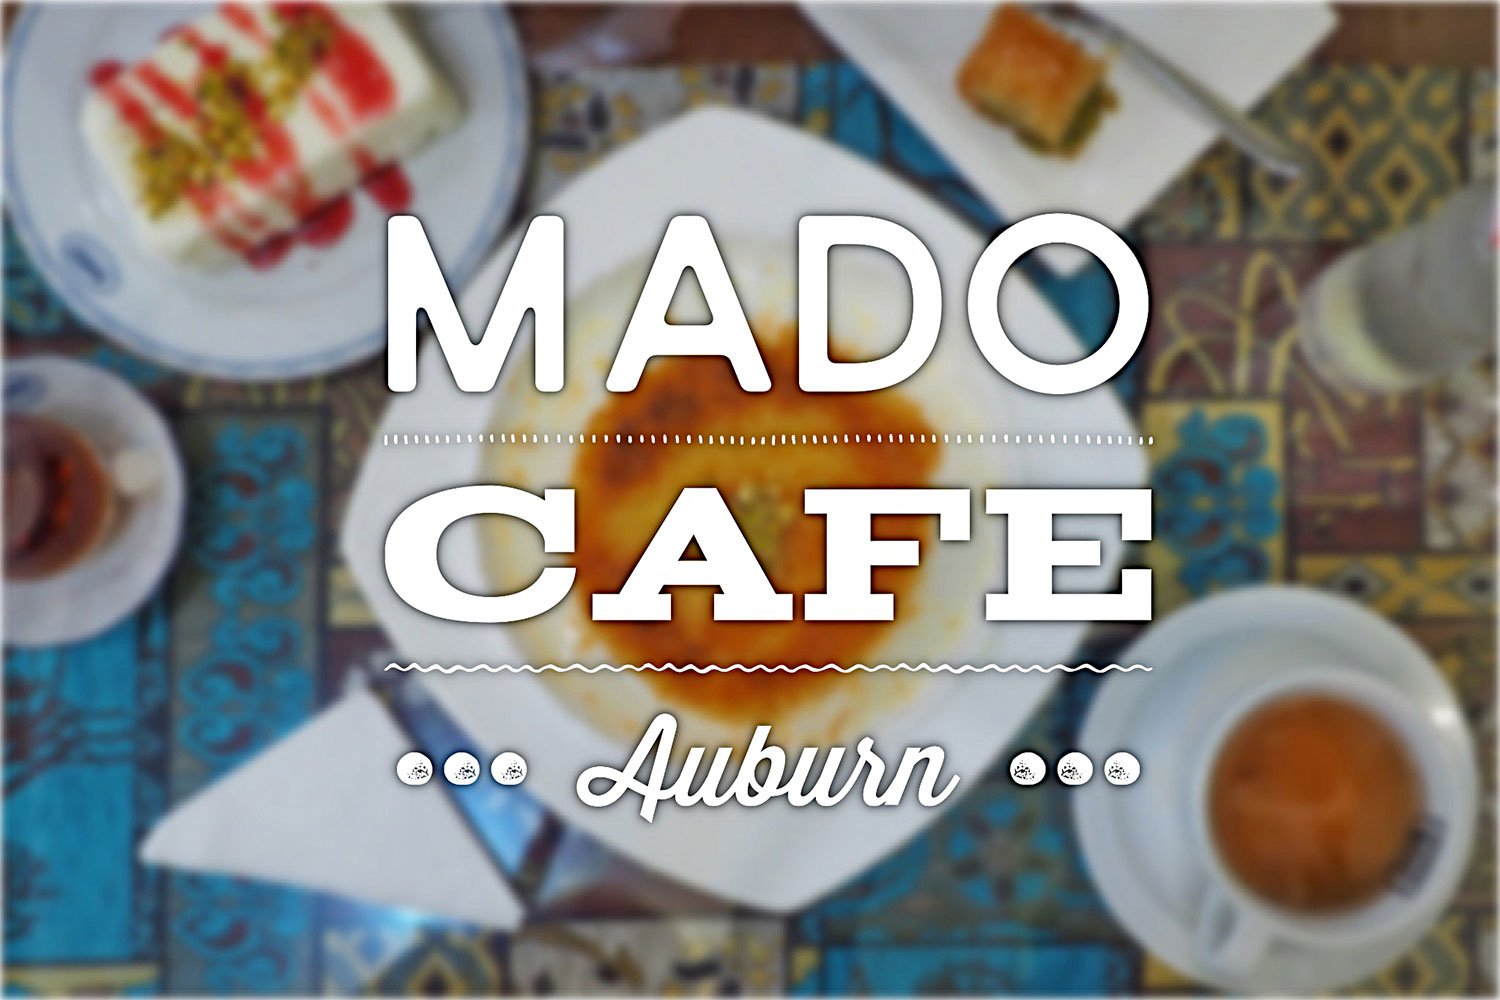 Sydney Food Blog Review of Mado Cafe, Auburn